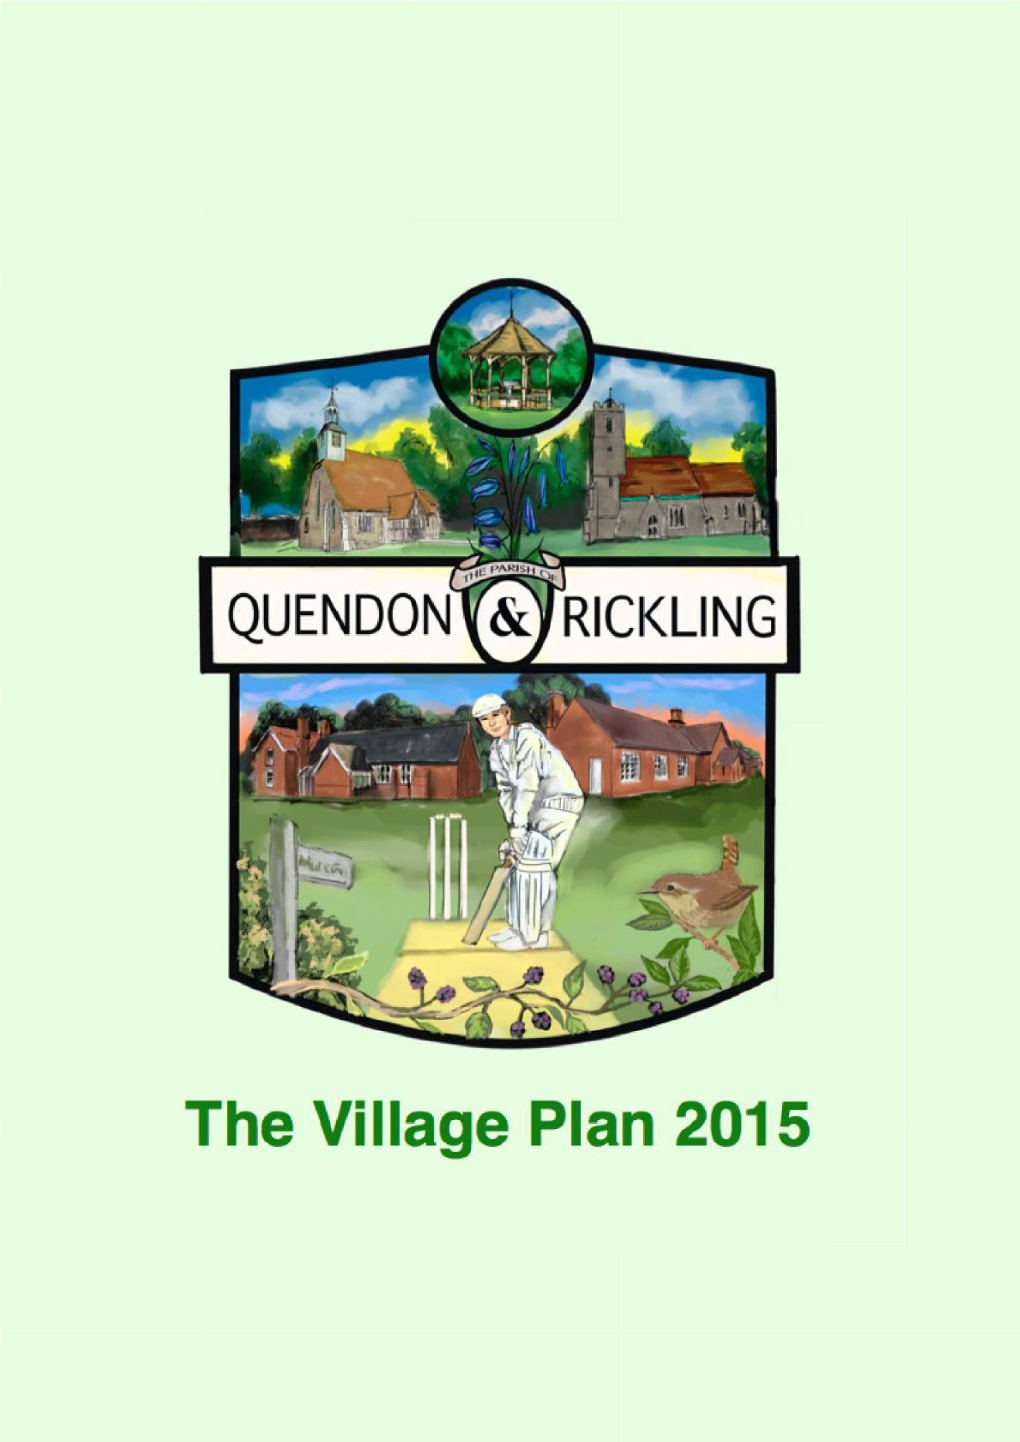 The 2015 Quendon & Rickling Village Plan